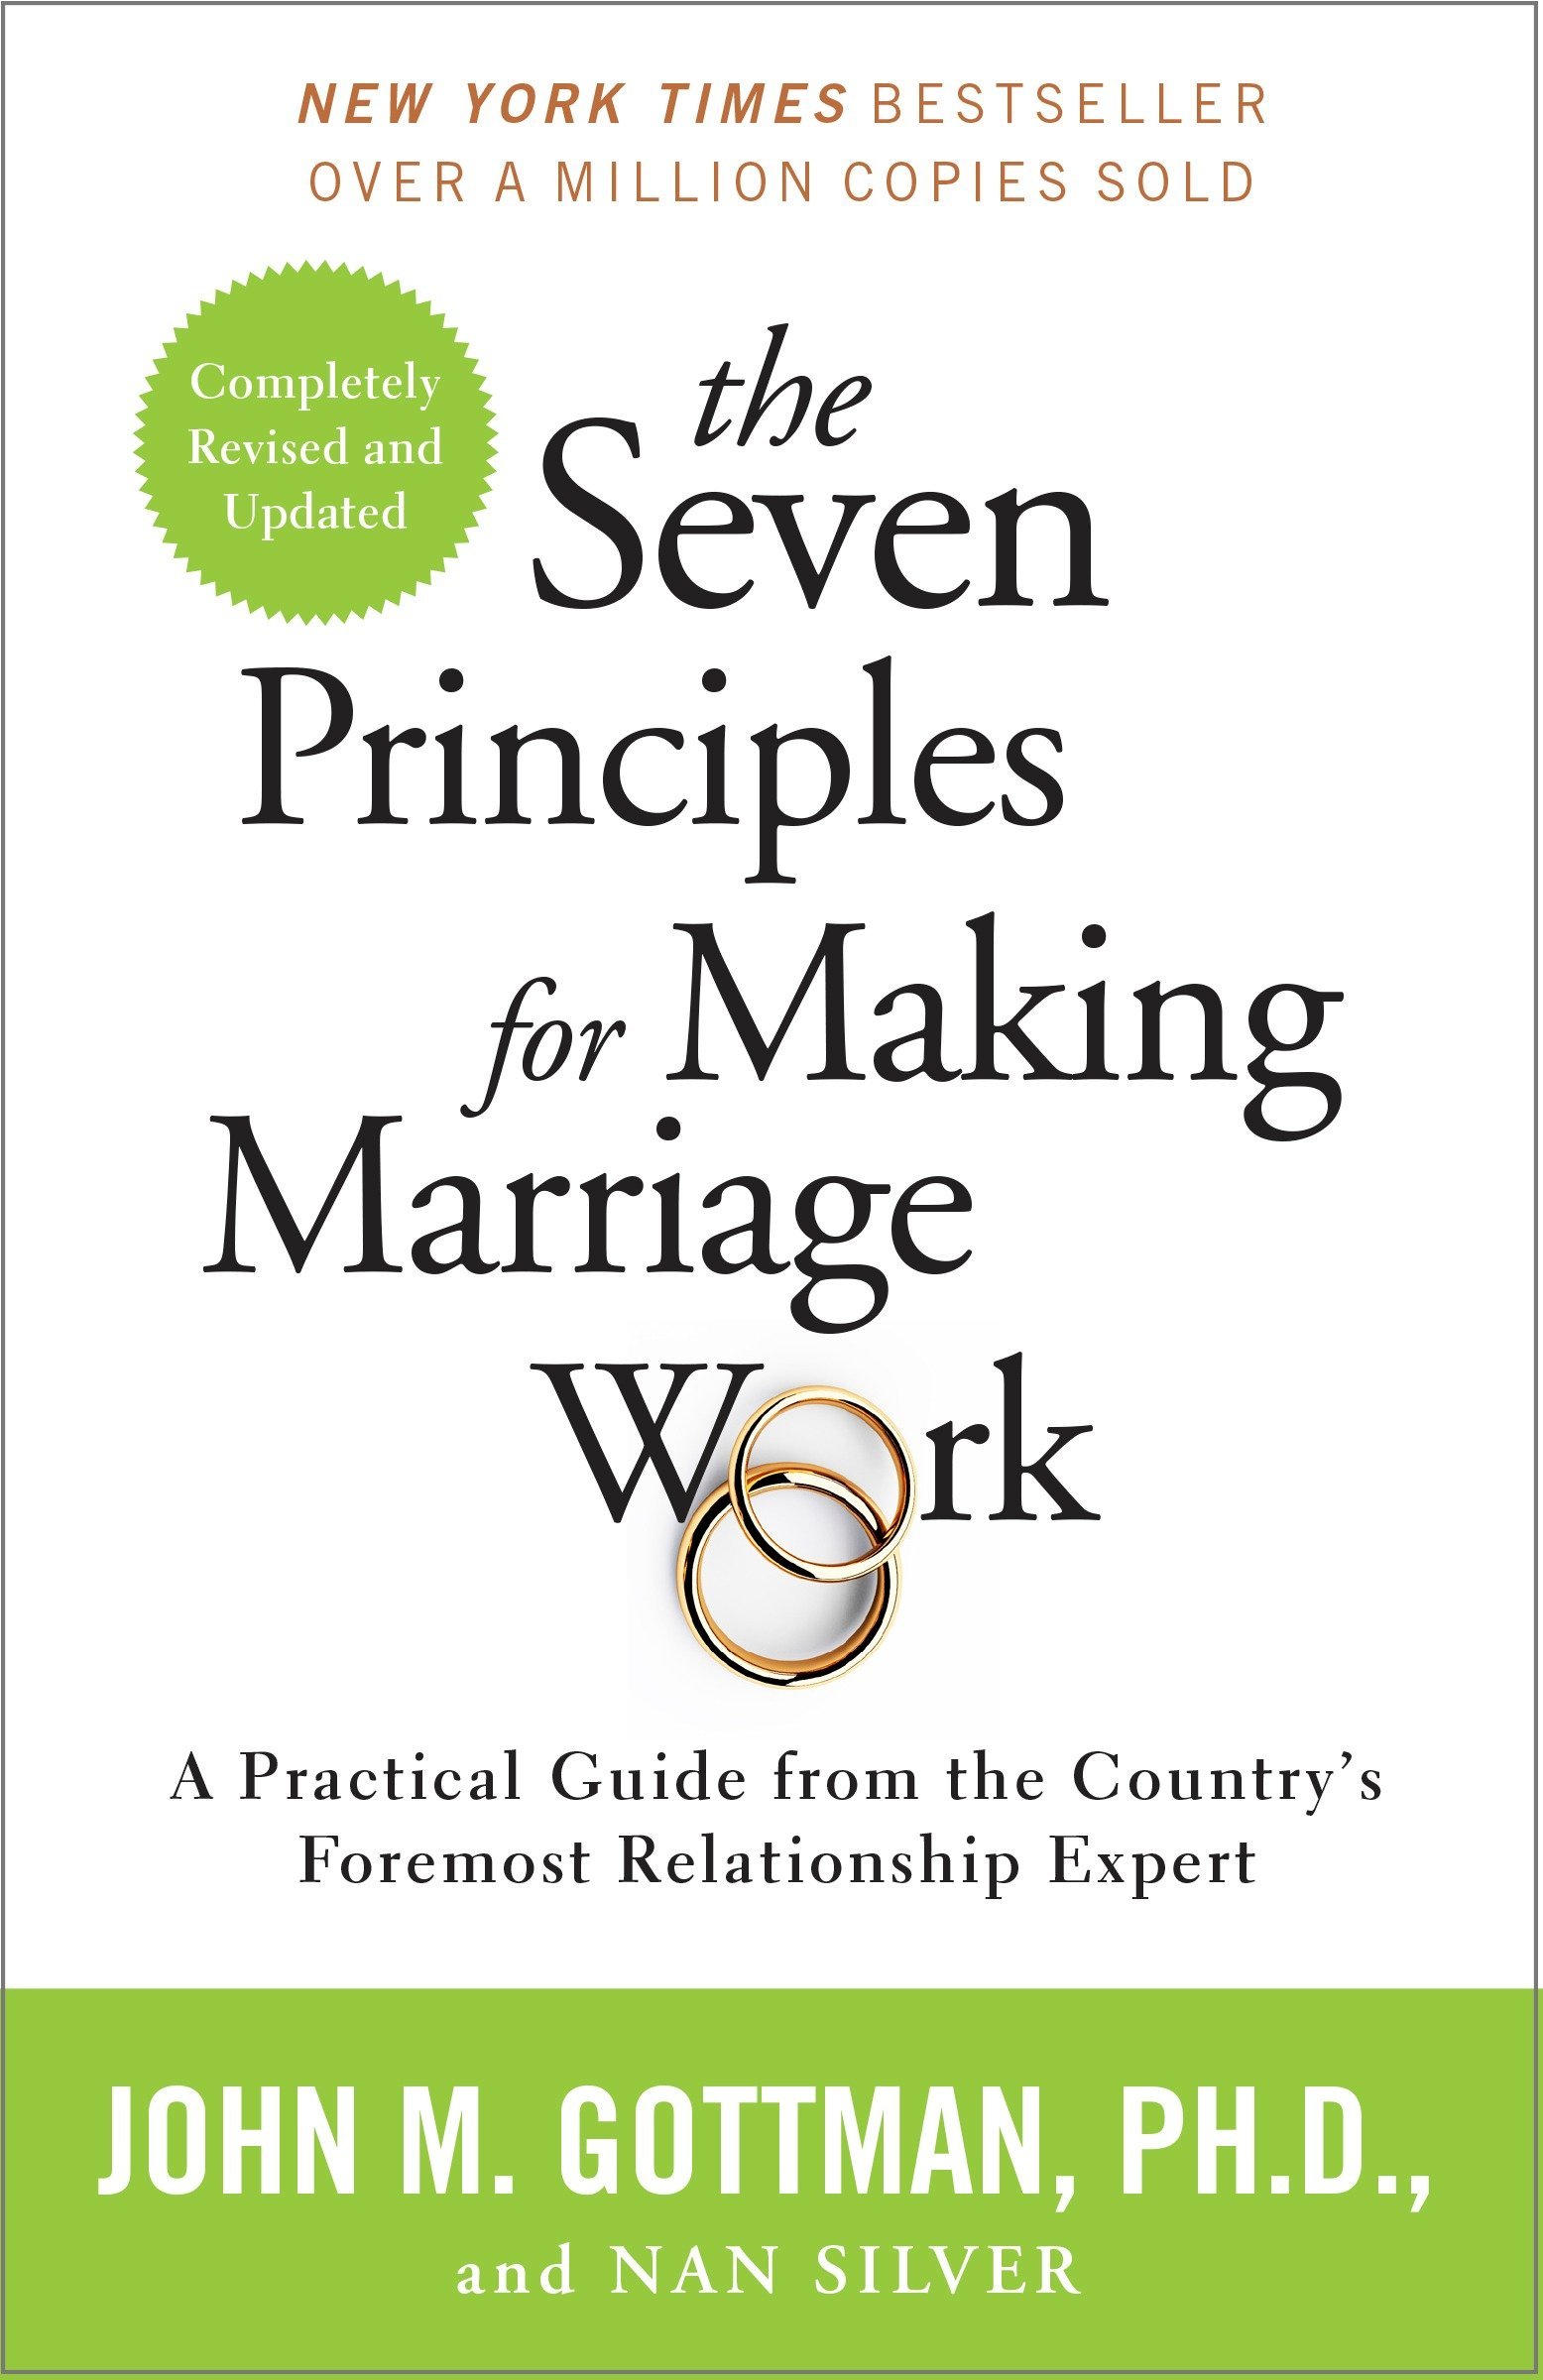 The Seven Principles for Making Marriage Work PDF EnglishPDF